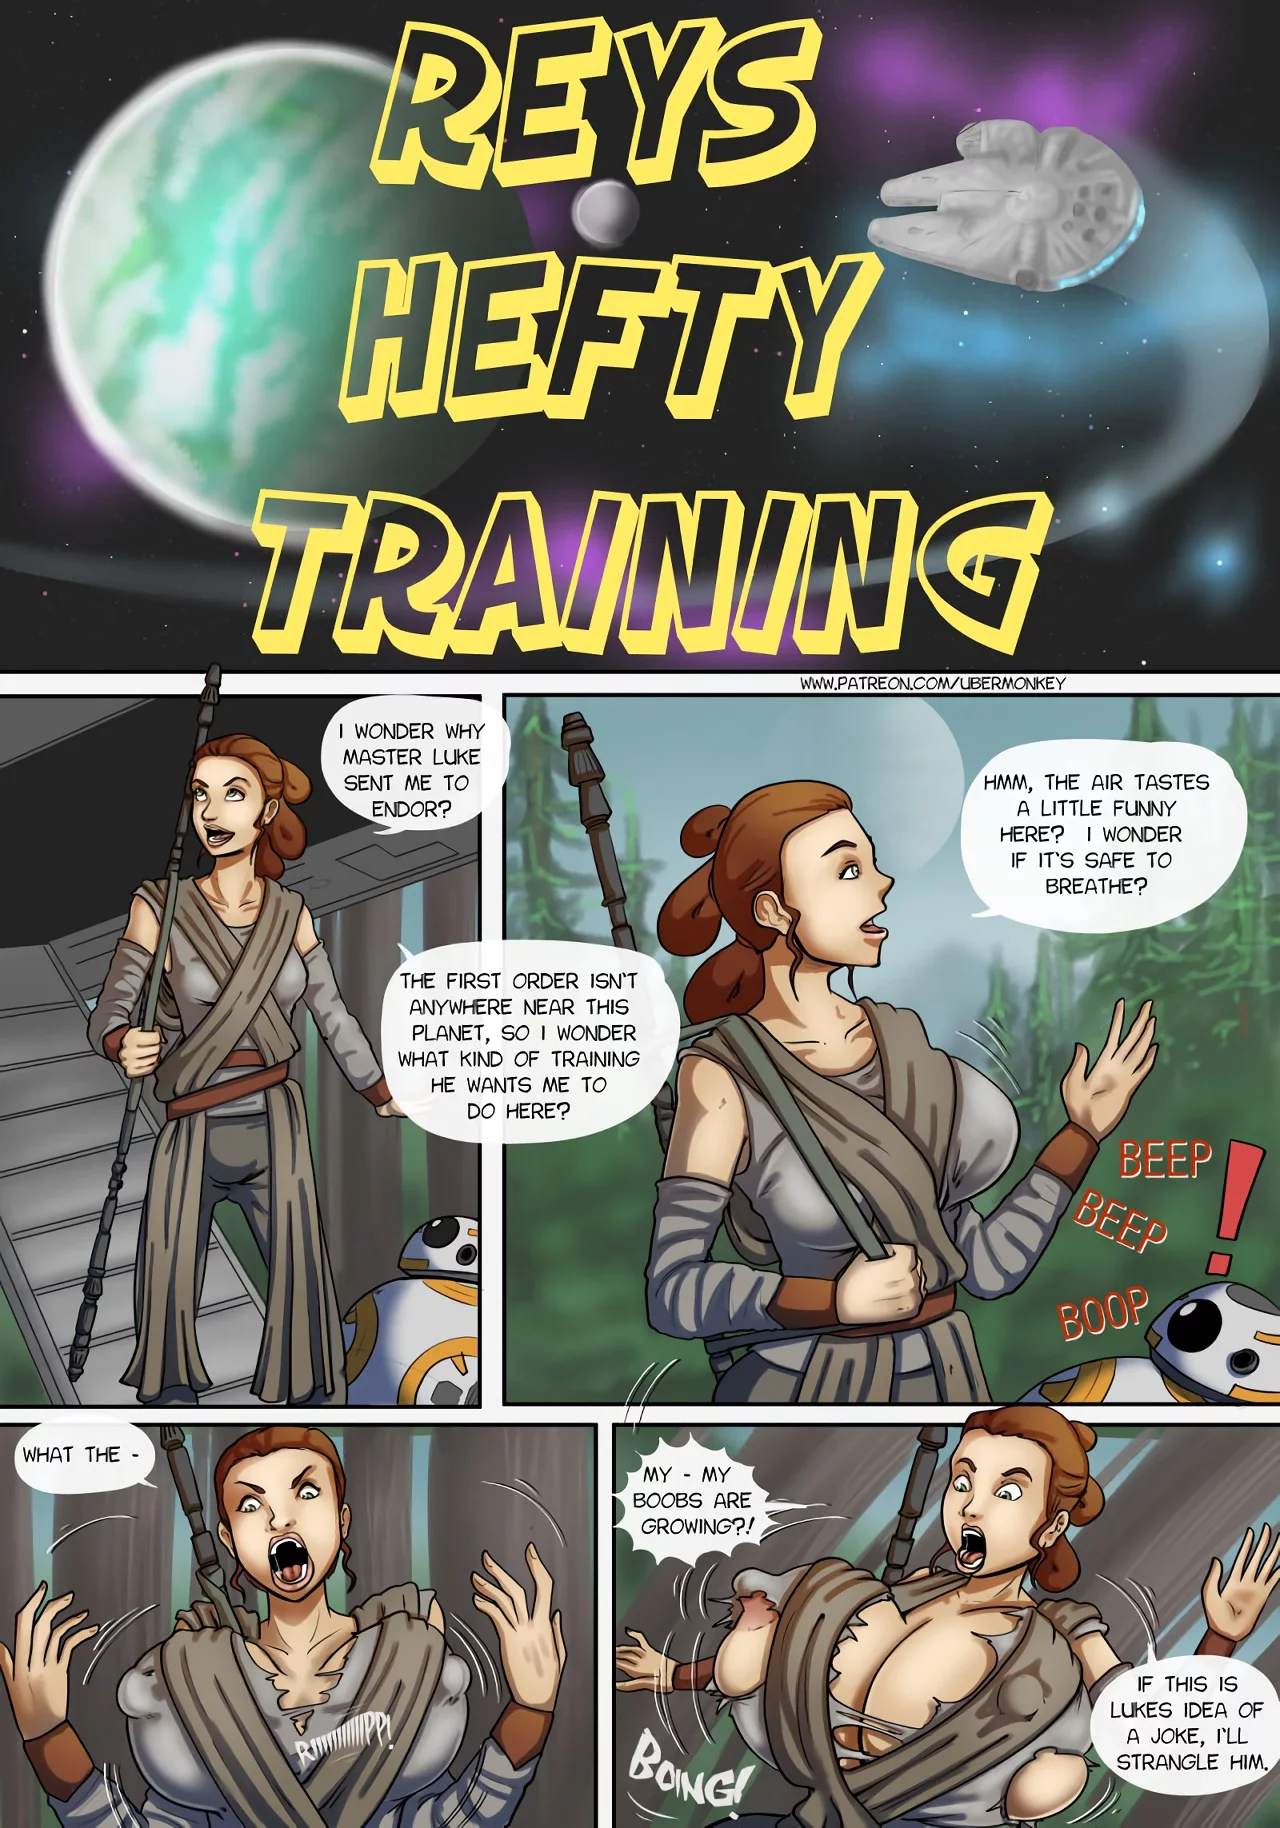 UberMonkey Rey's Hefty Training (Star Wars) porn comic